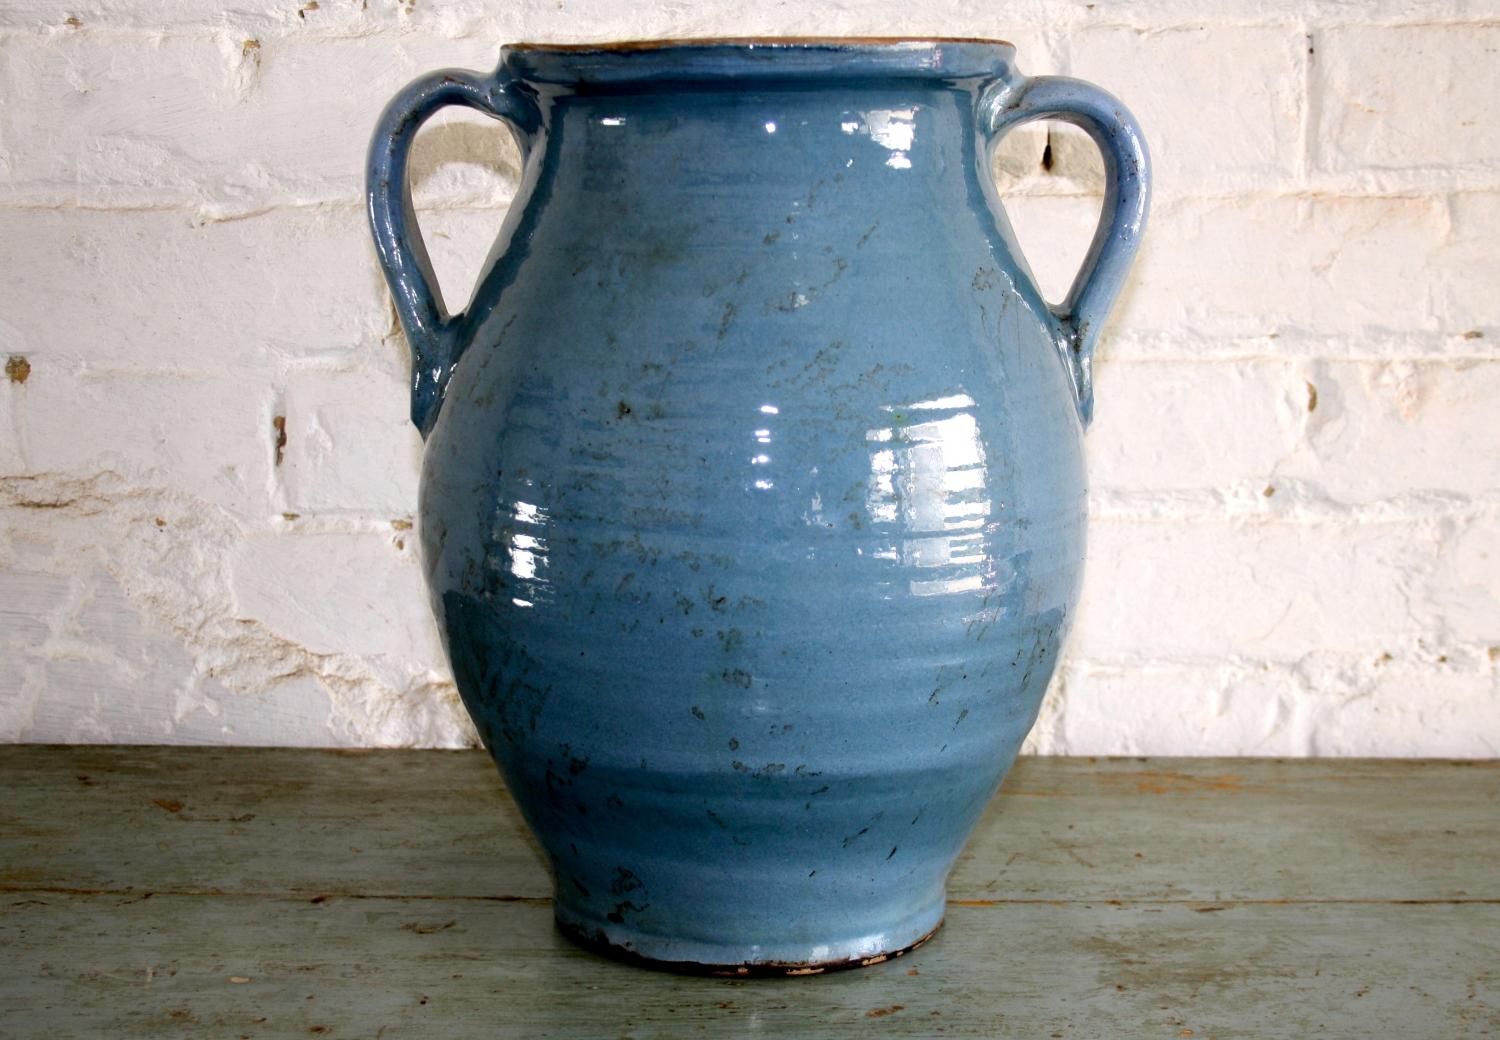 Blue Pot